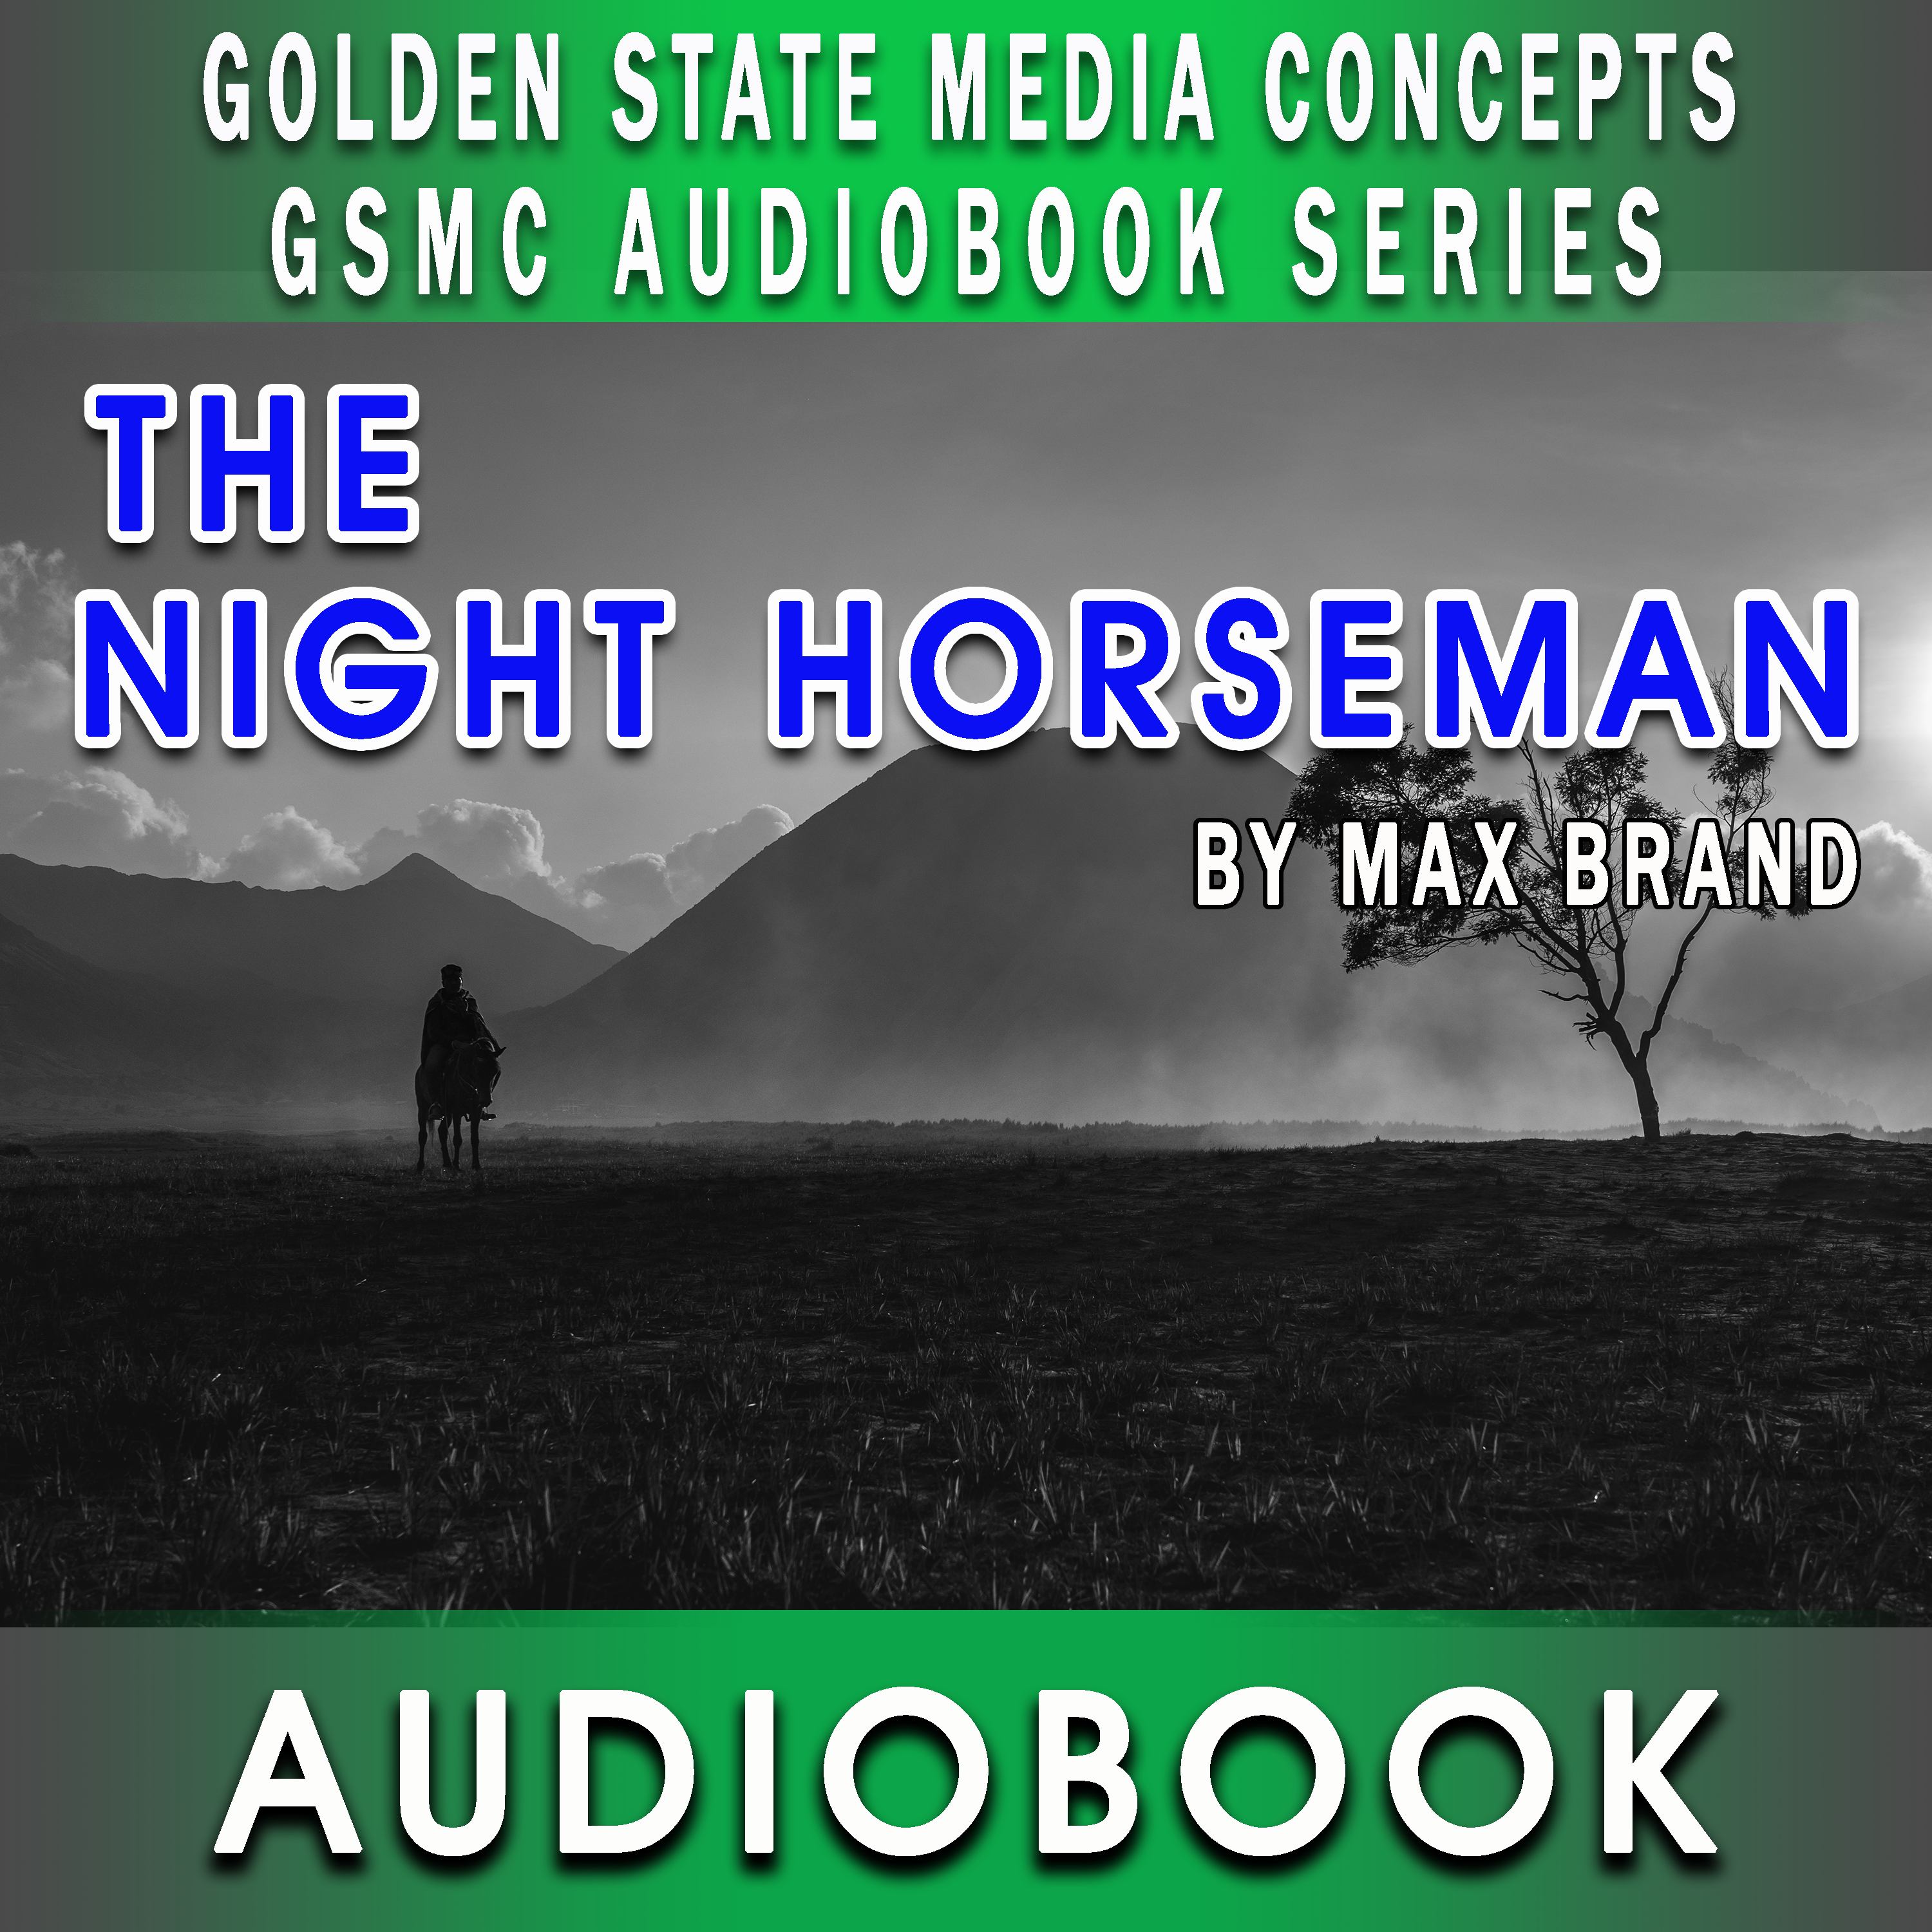 GSMC Audiobook Series: The Night Horseman by Max Brand